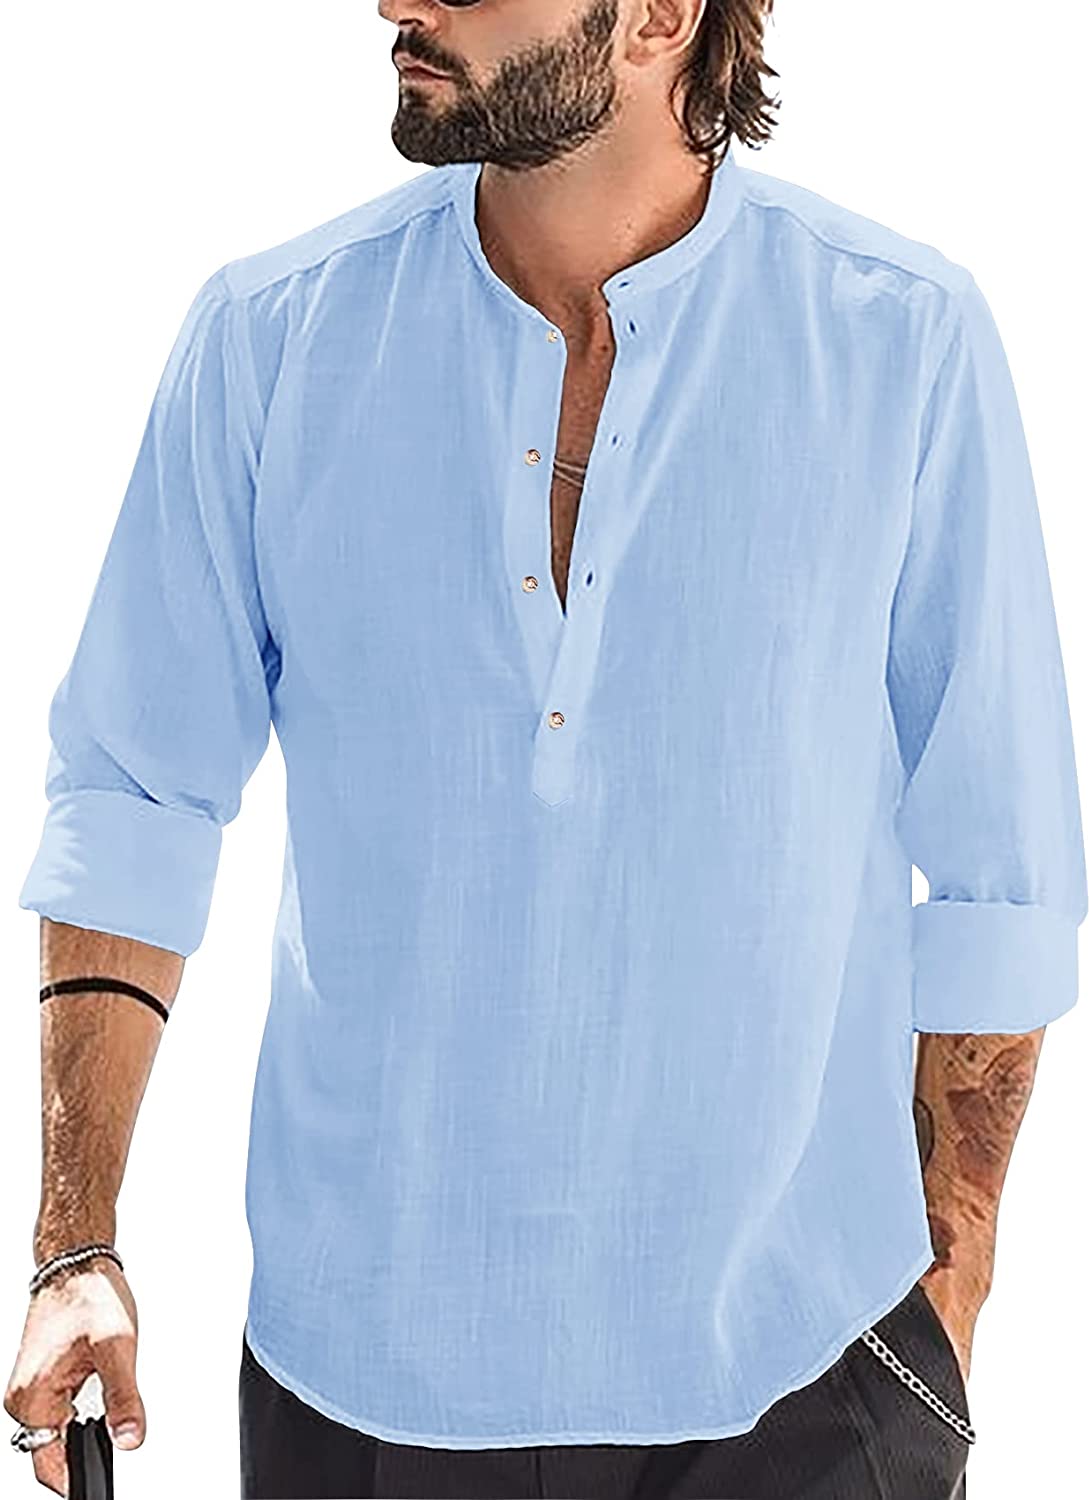 Summer Half Sleeve Blouse Loose Fit Henleys Tops Mens Fashion Cotton Linen Shirts 